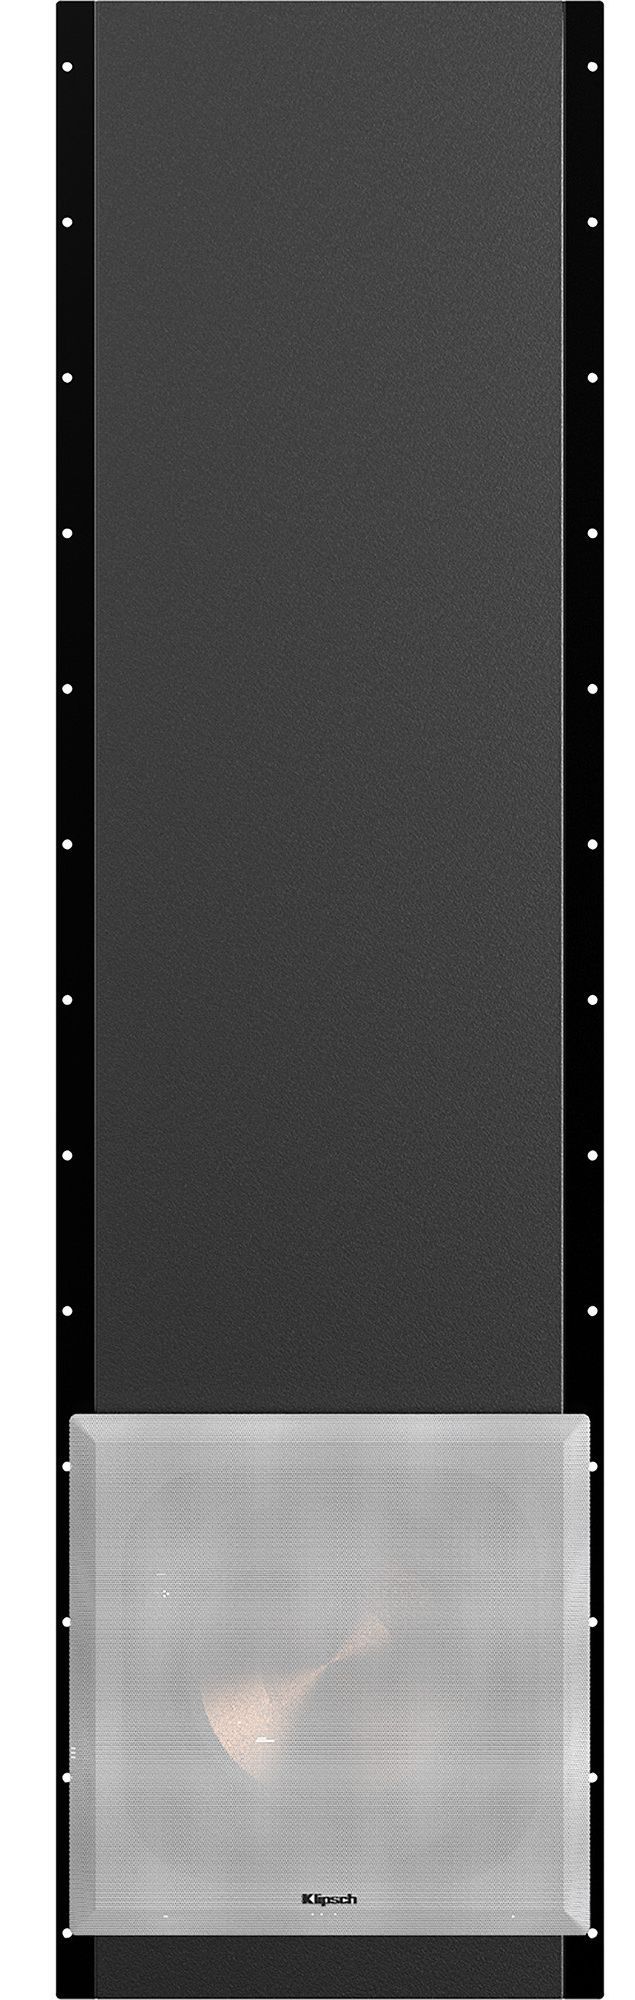 Klipsch® Professional Series PRO-1200SW Black Polymer Veneer 12" In-Wall Subwoofer 5